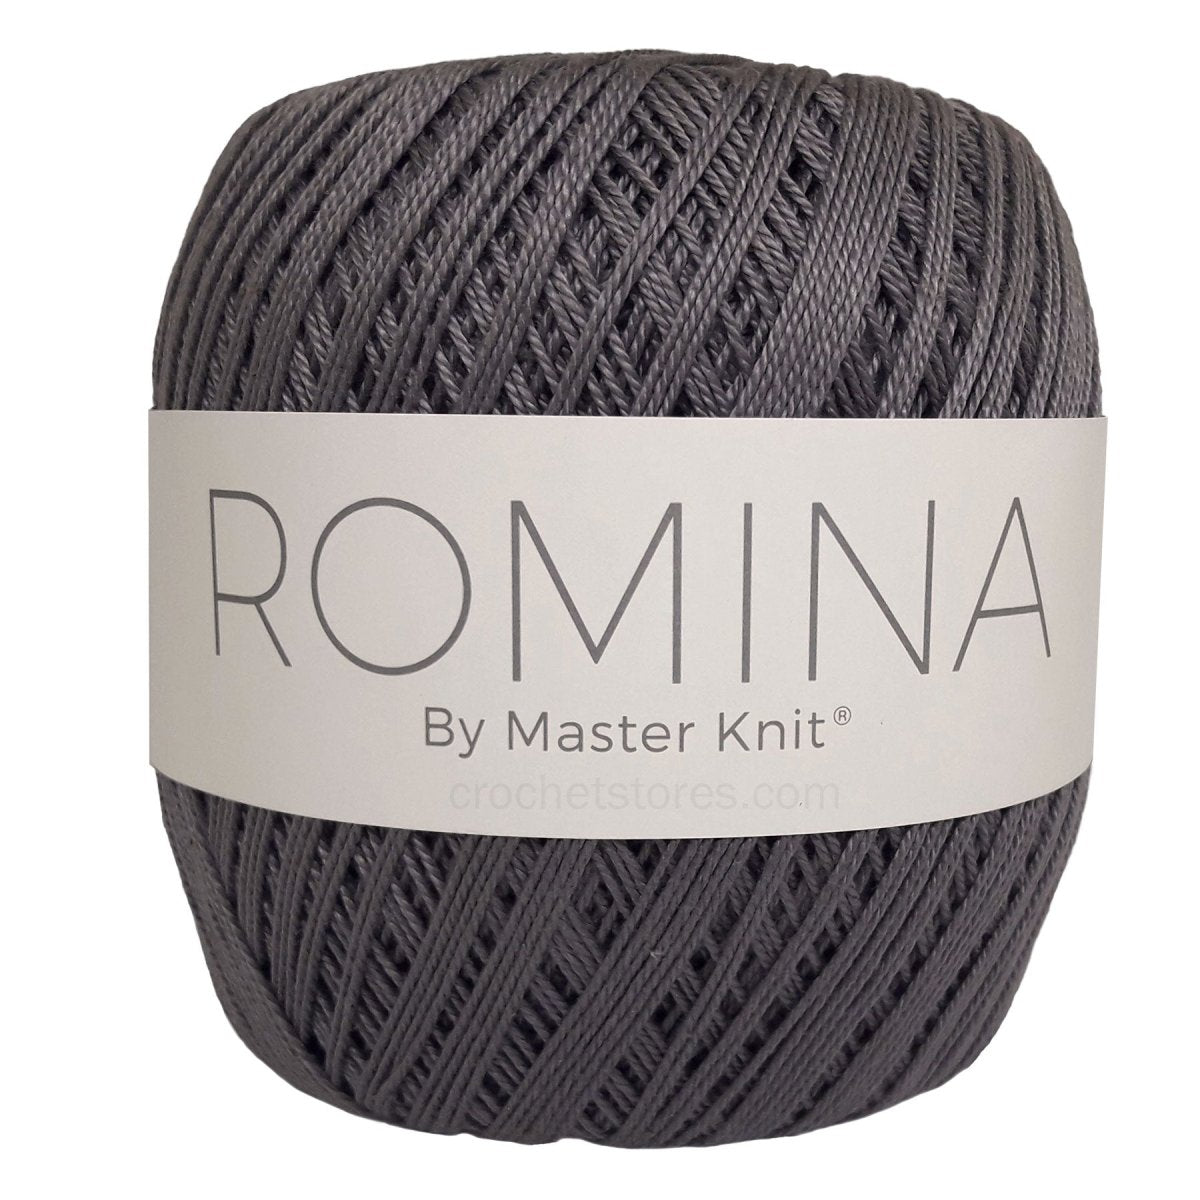 ROMINA - Crochetstores9335-903745051438722